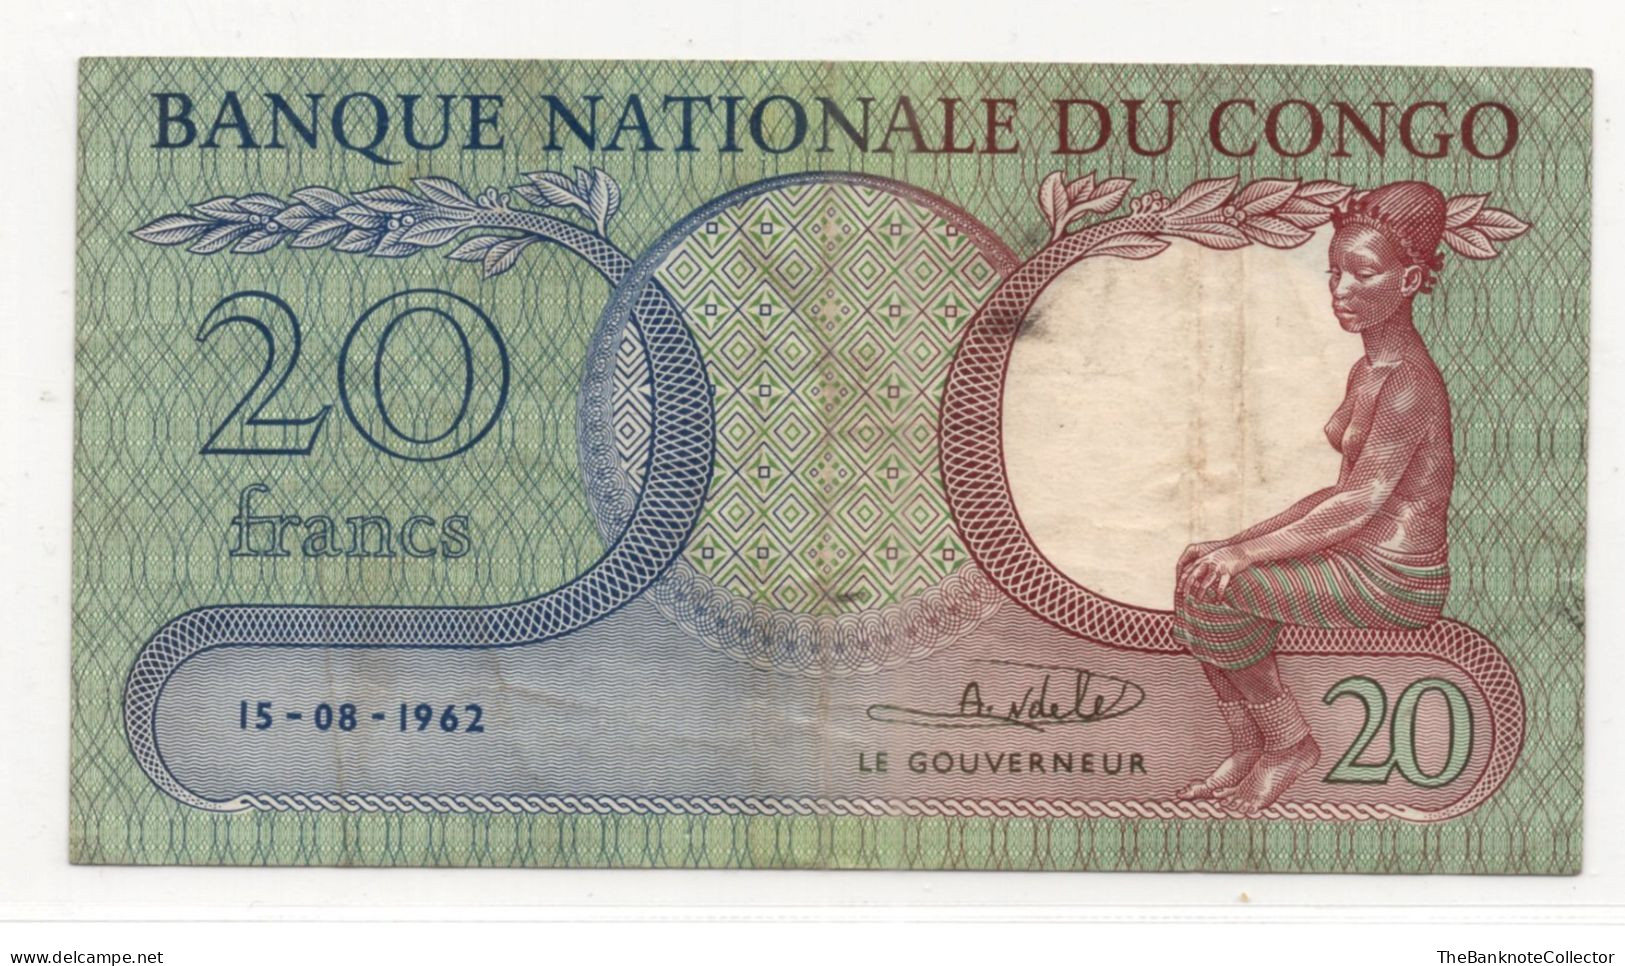 Congo 20 Francs 1962 P-4 Very Fine - Republic Of Congo (Congo-Brazzaville)